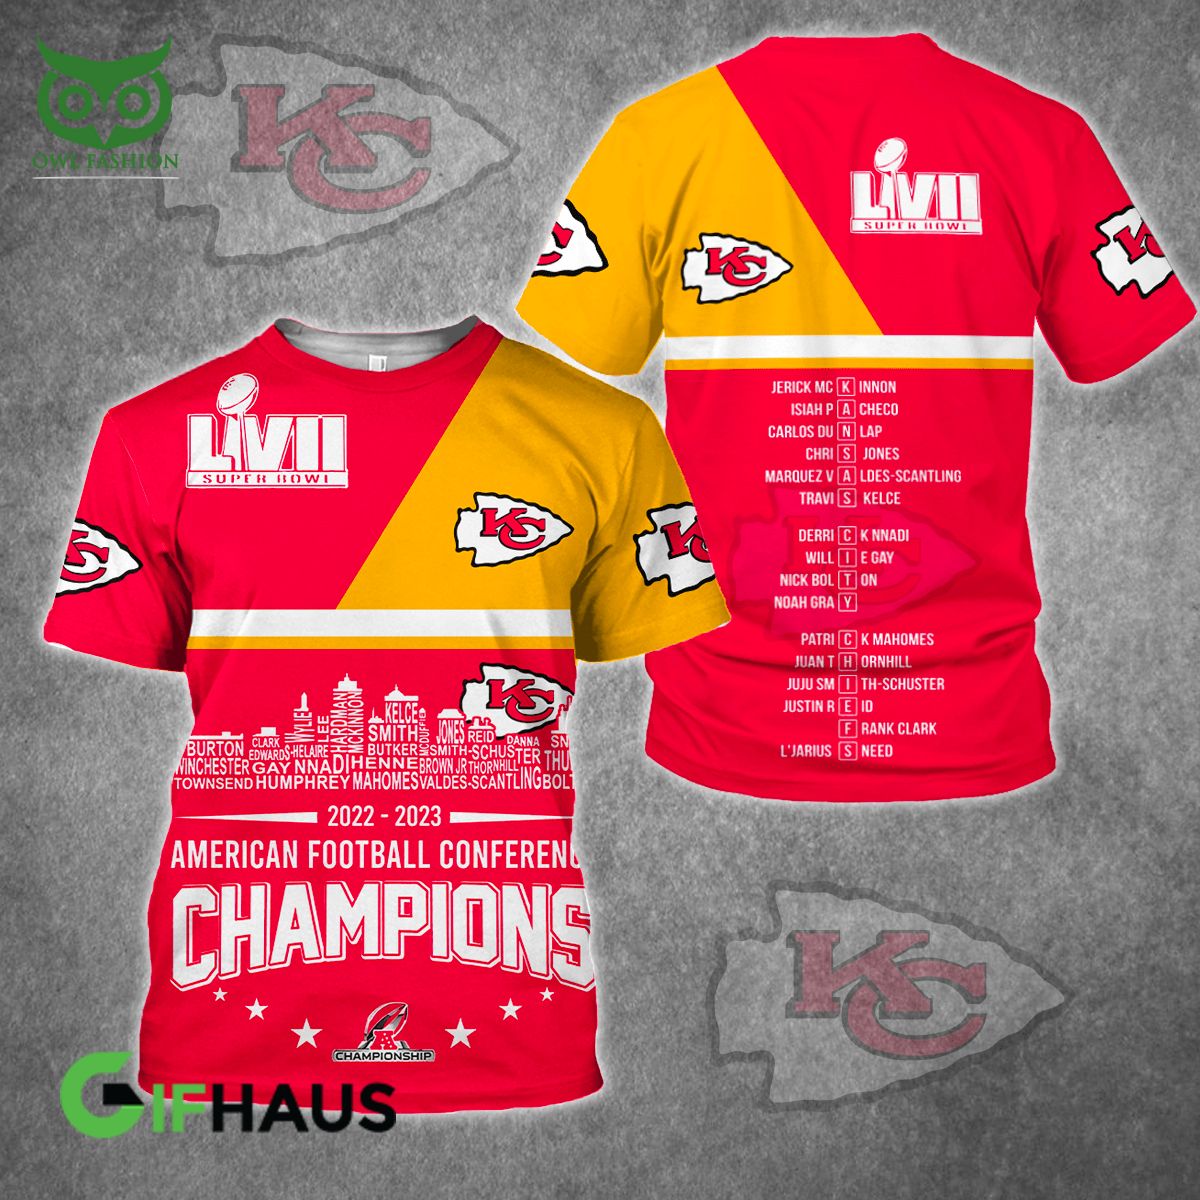 Kansas City Chiefs win Super Bowl; Get the commemorative T-shirts